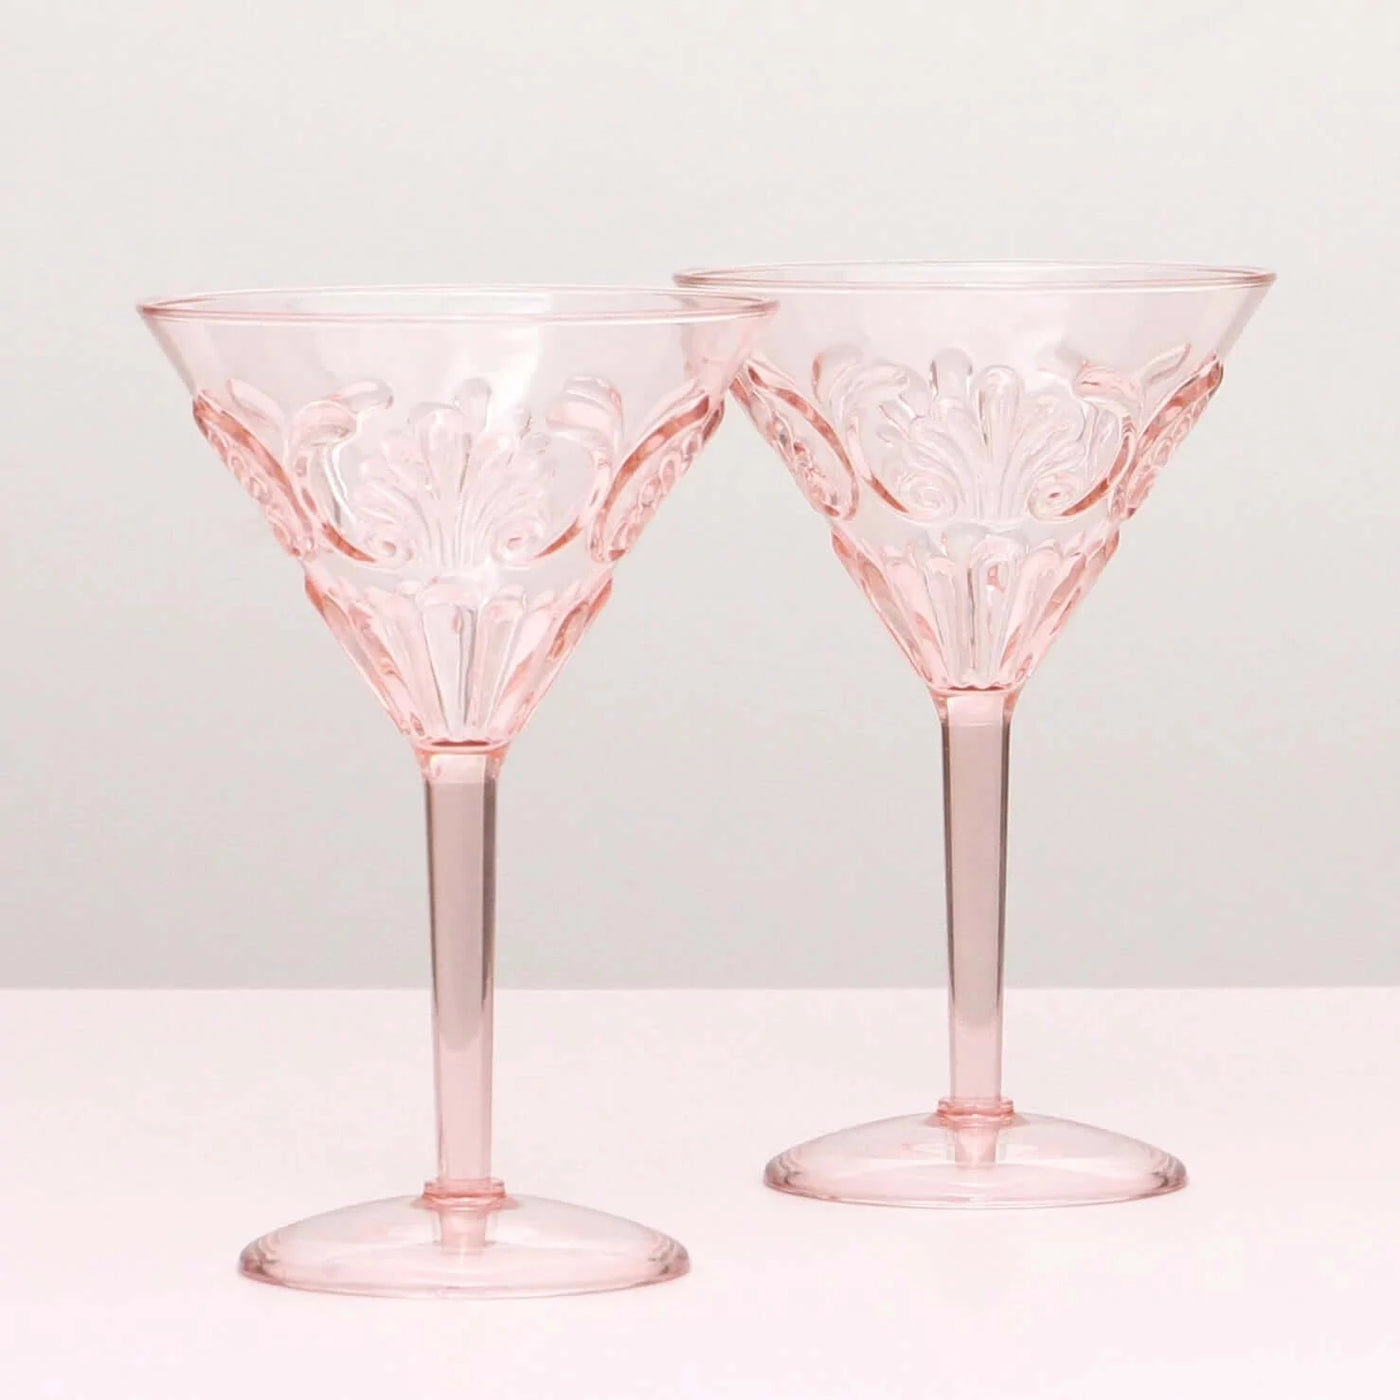 Flemington Acrylic Martini - Pale Pink